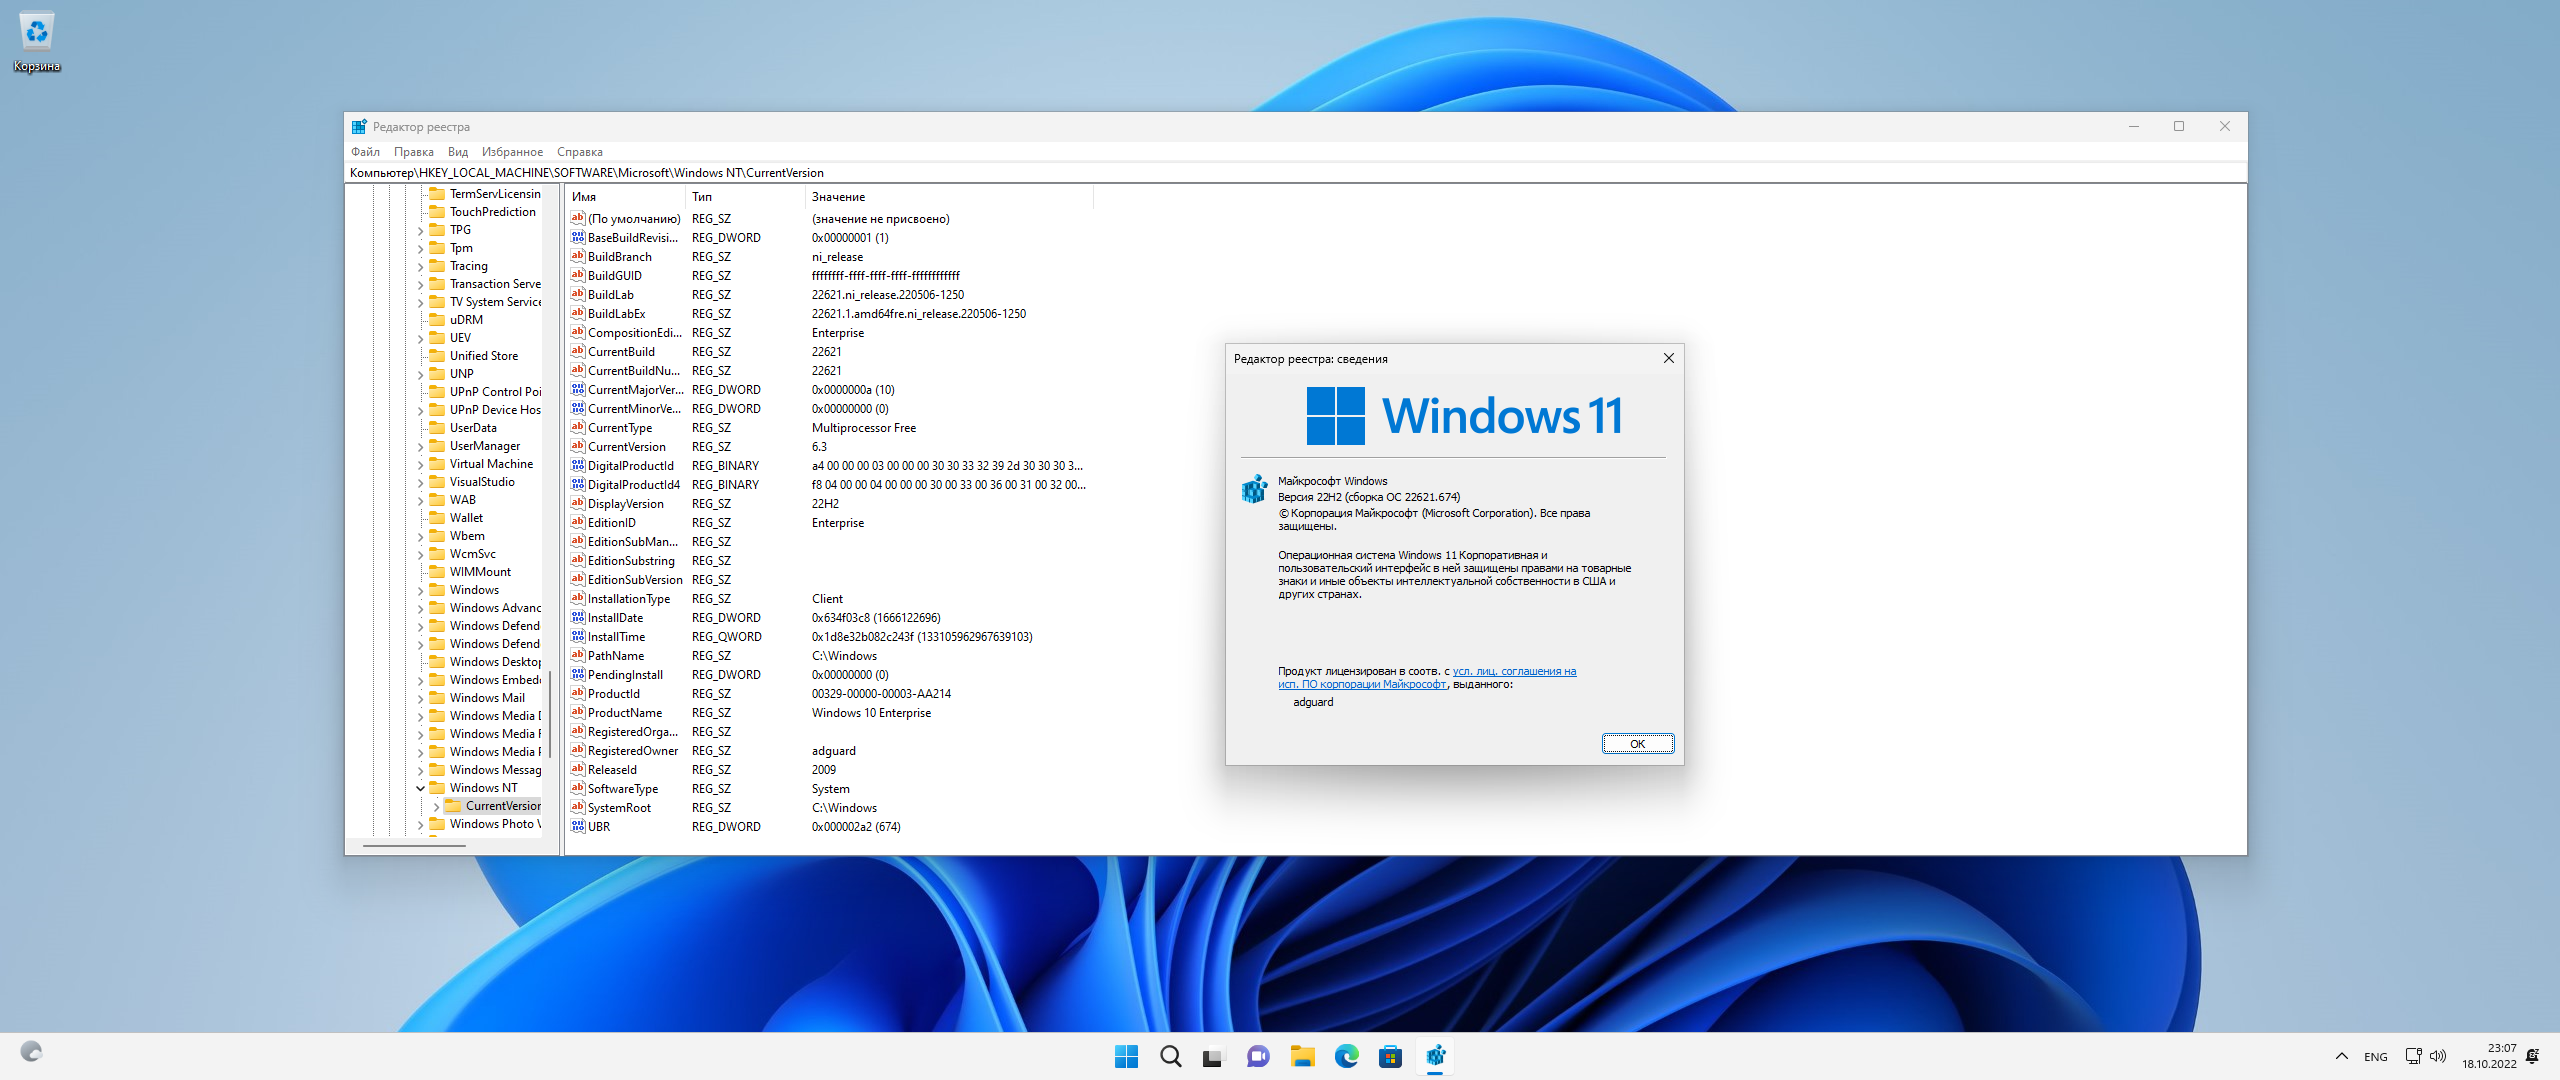 Windows 10 home 22h2 64 bit. Виндовс 10 версия 21h2 64 бит. Интерфейс 11 винды. Win 11 Скриншоты. Обновление виндовс 11.